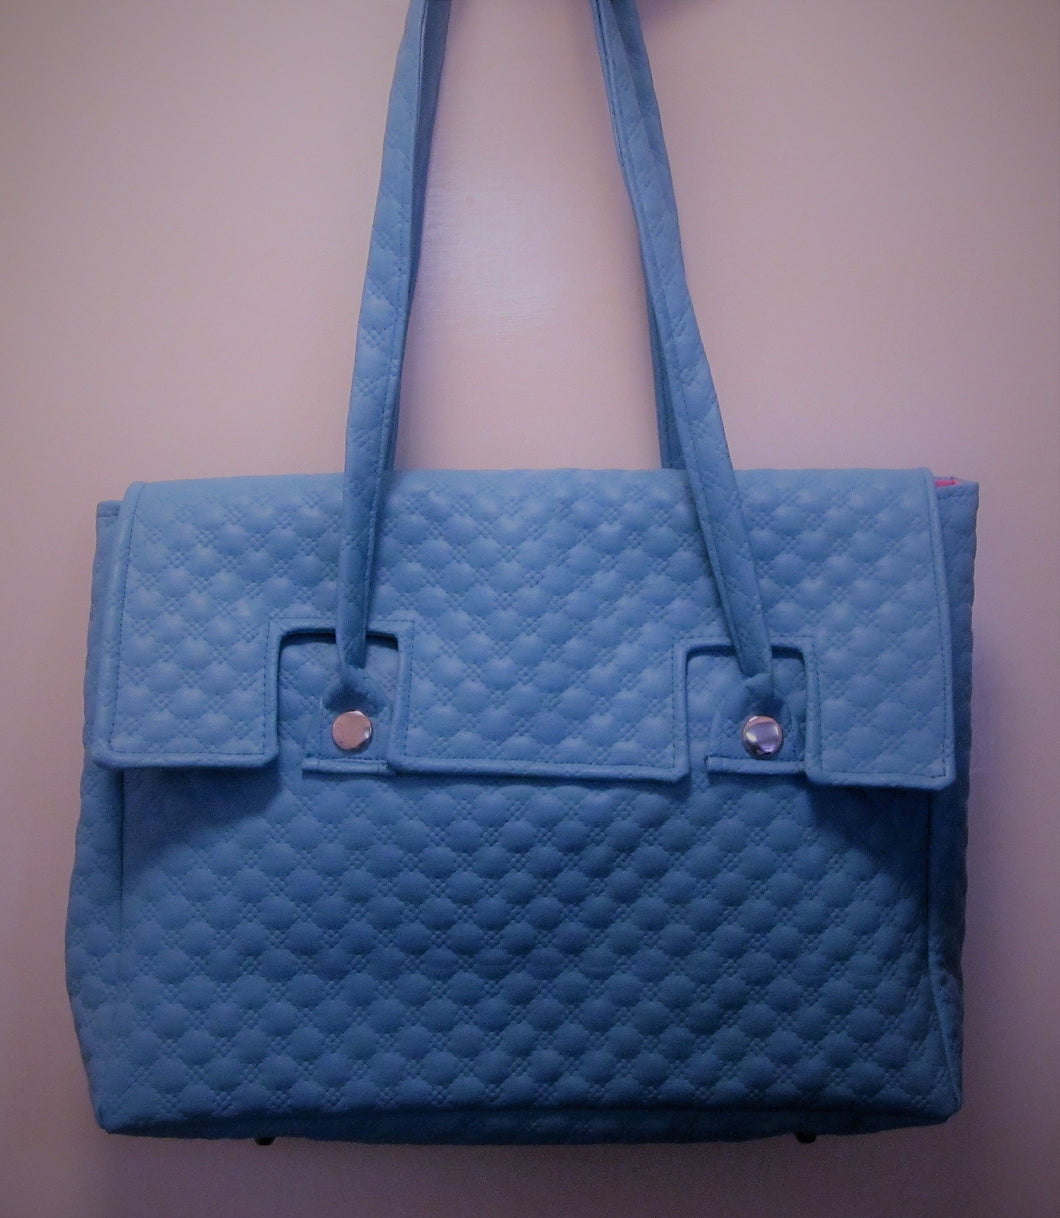 Beautiful handcrafted blue handbag